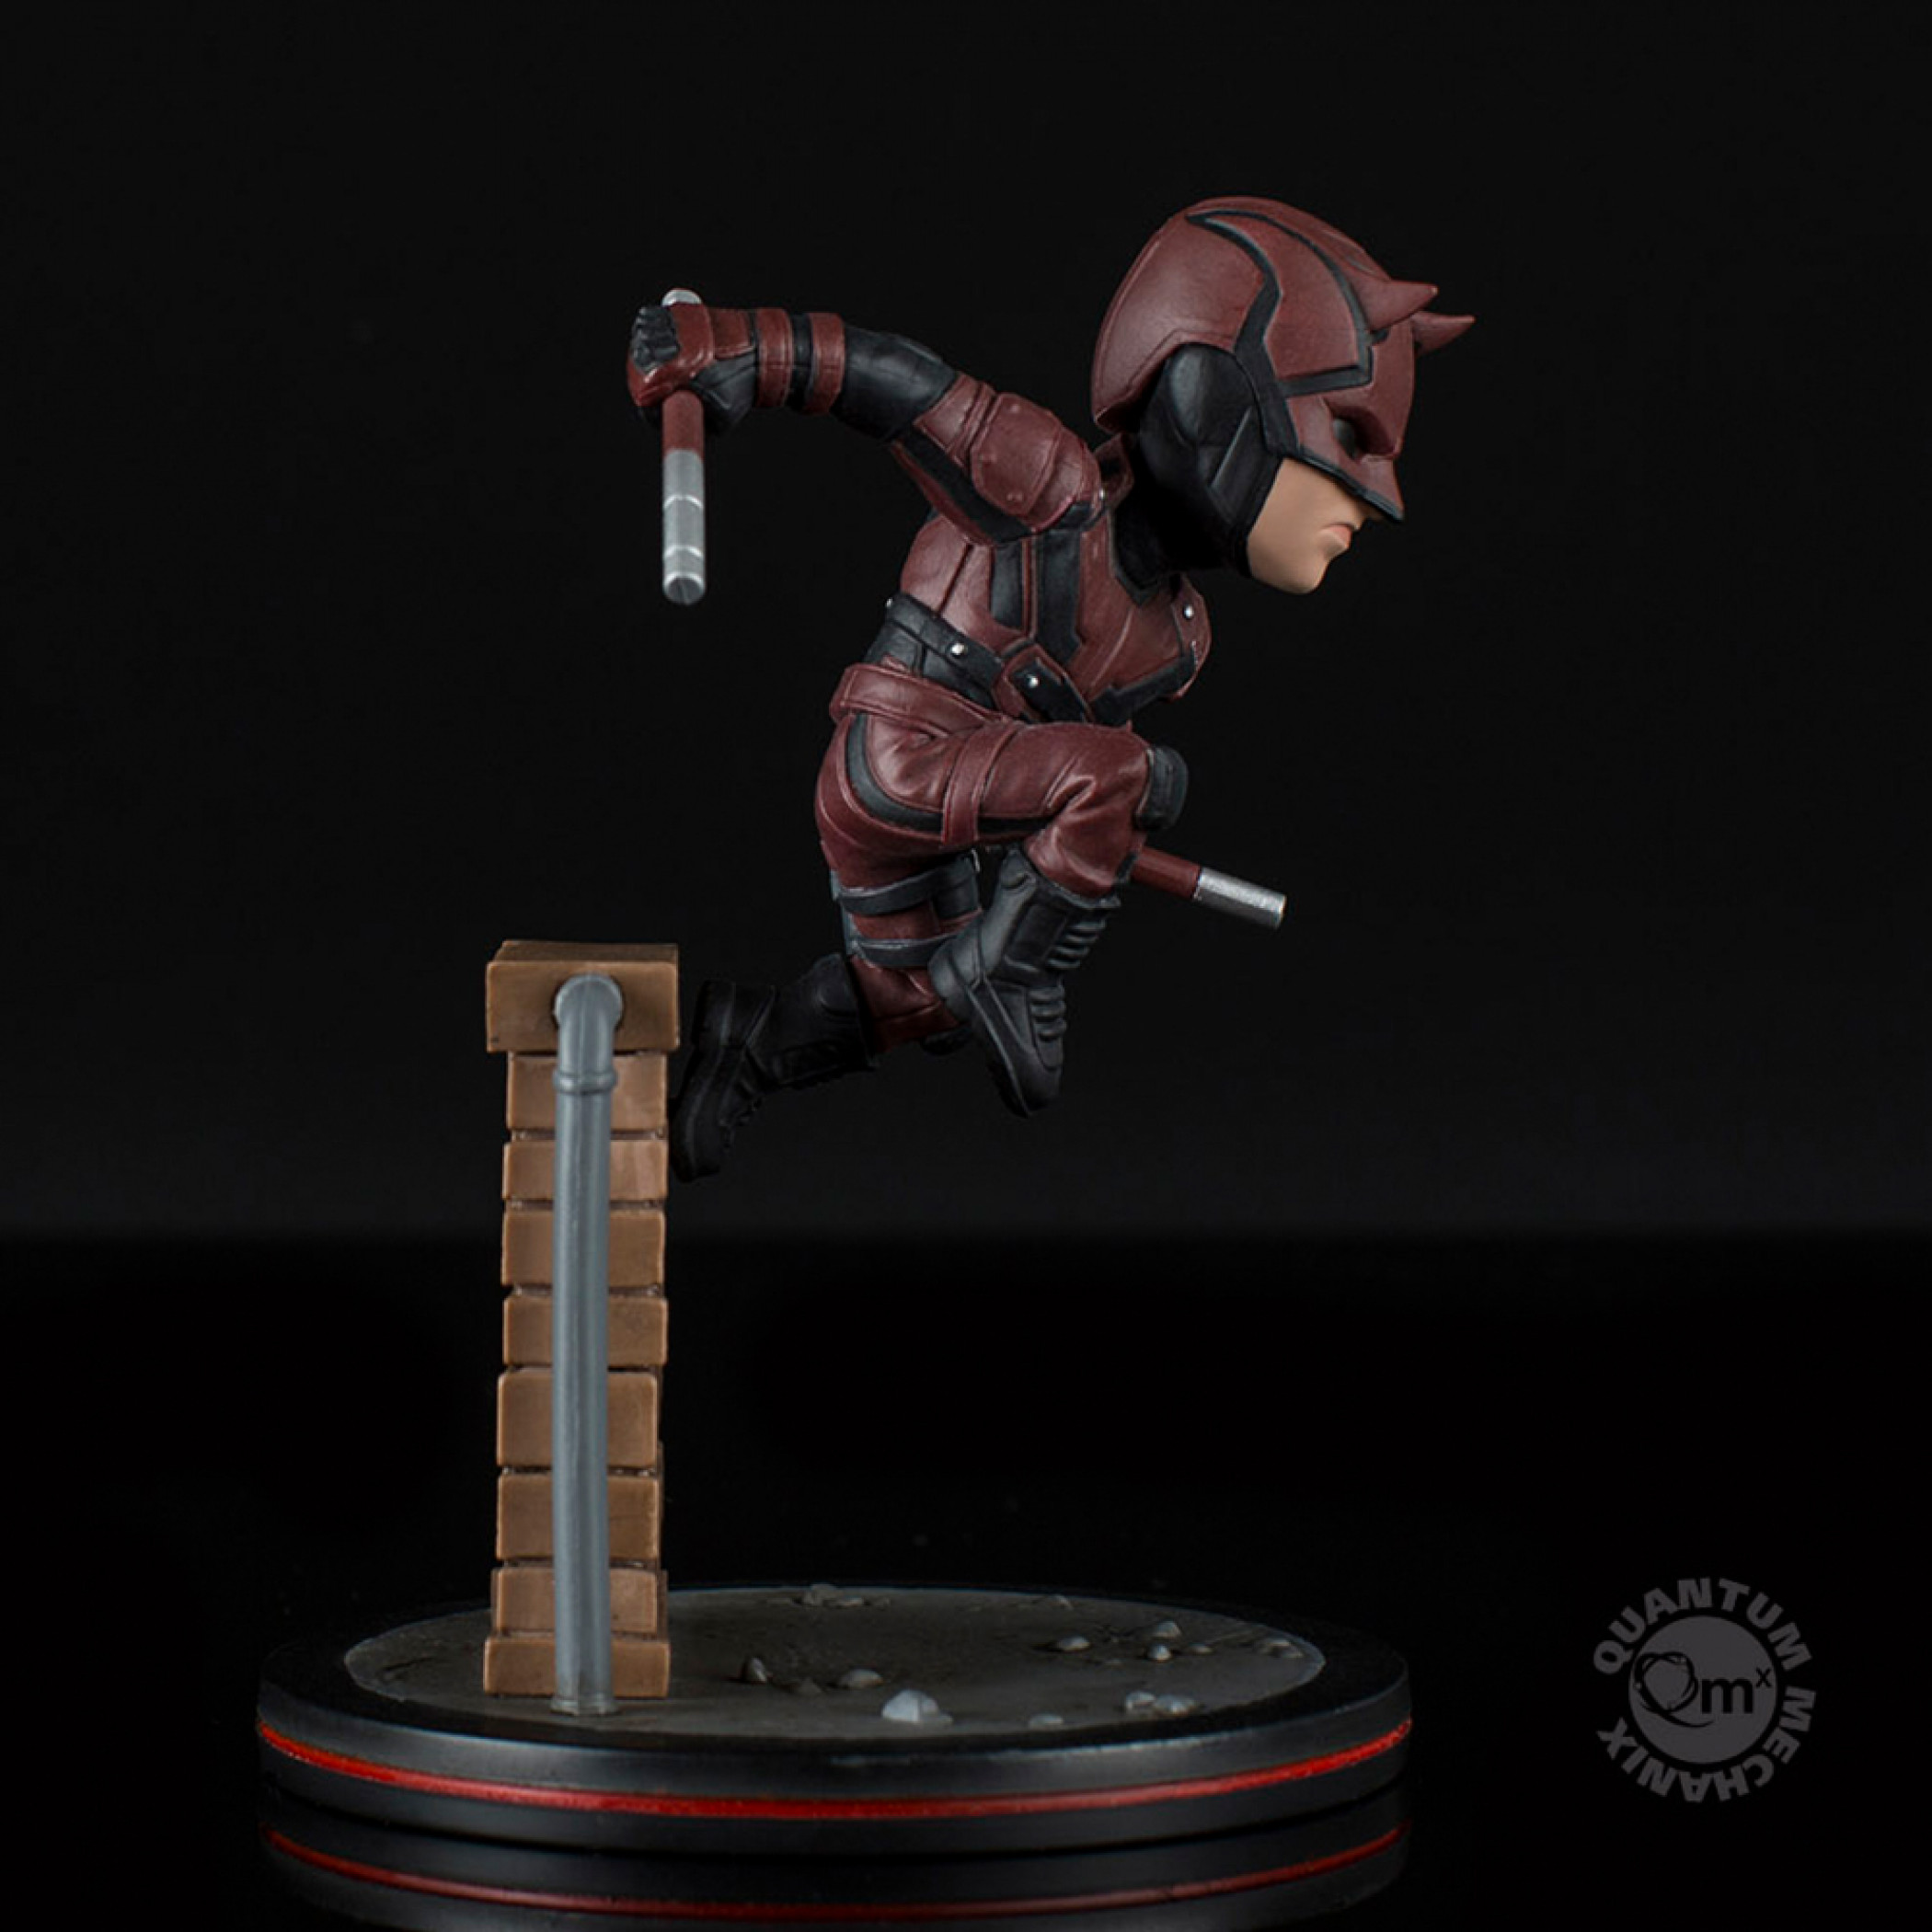 Marvel Comics Daredevil Q-Fig Diorama Figurine